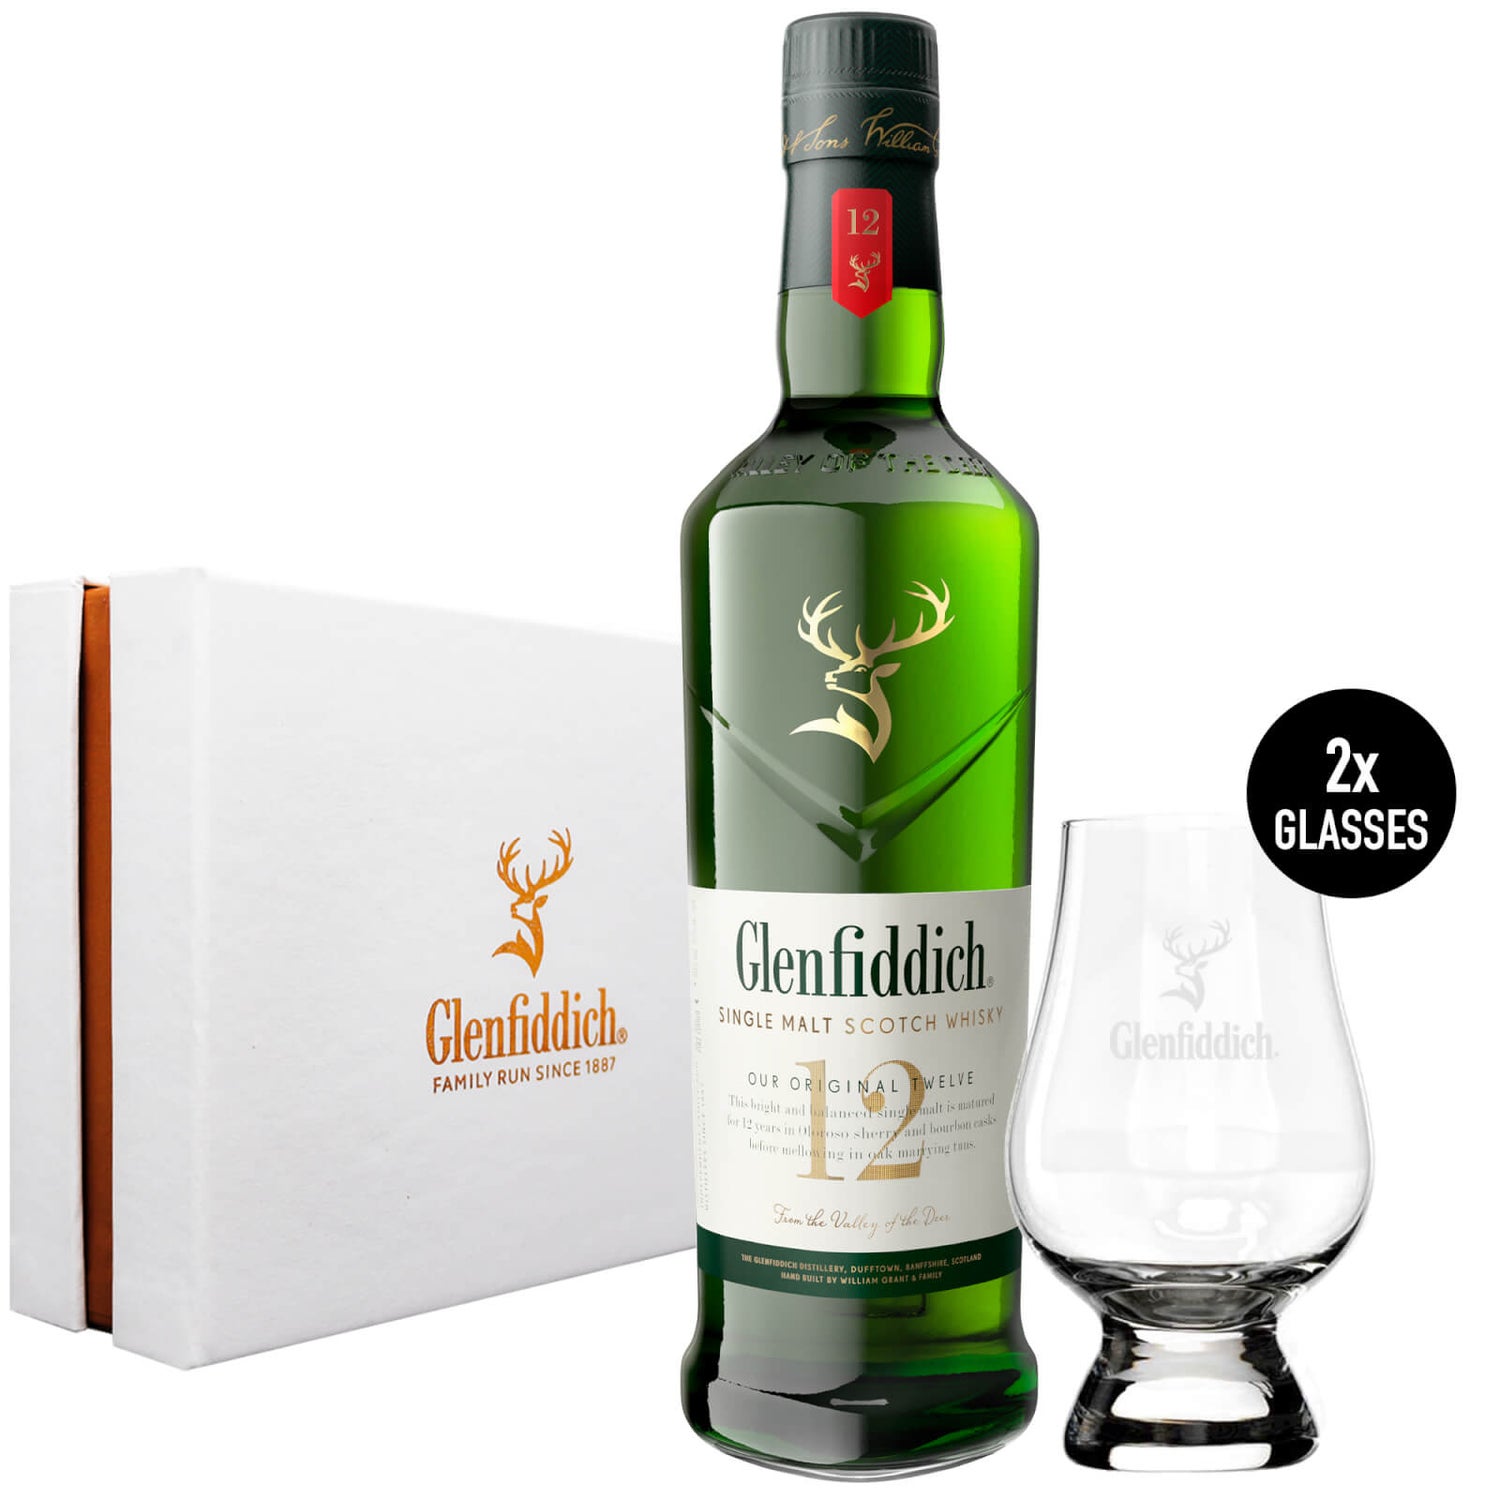 Glenfiddich 12 Year Old Single Malt Scotch Whisky and Glencairn Glasses Gift Set